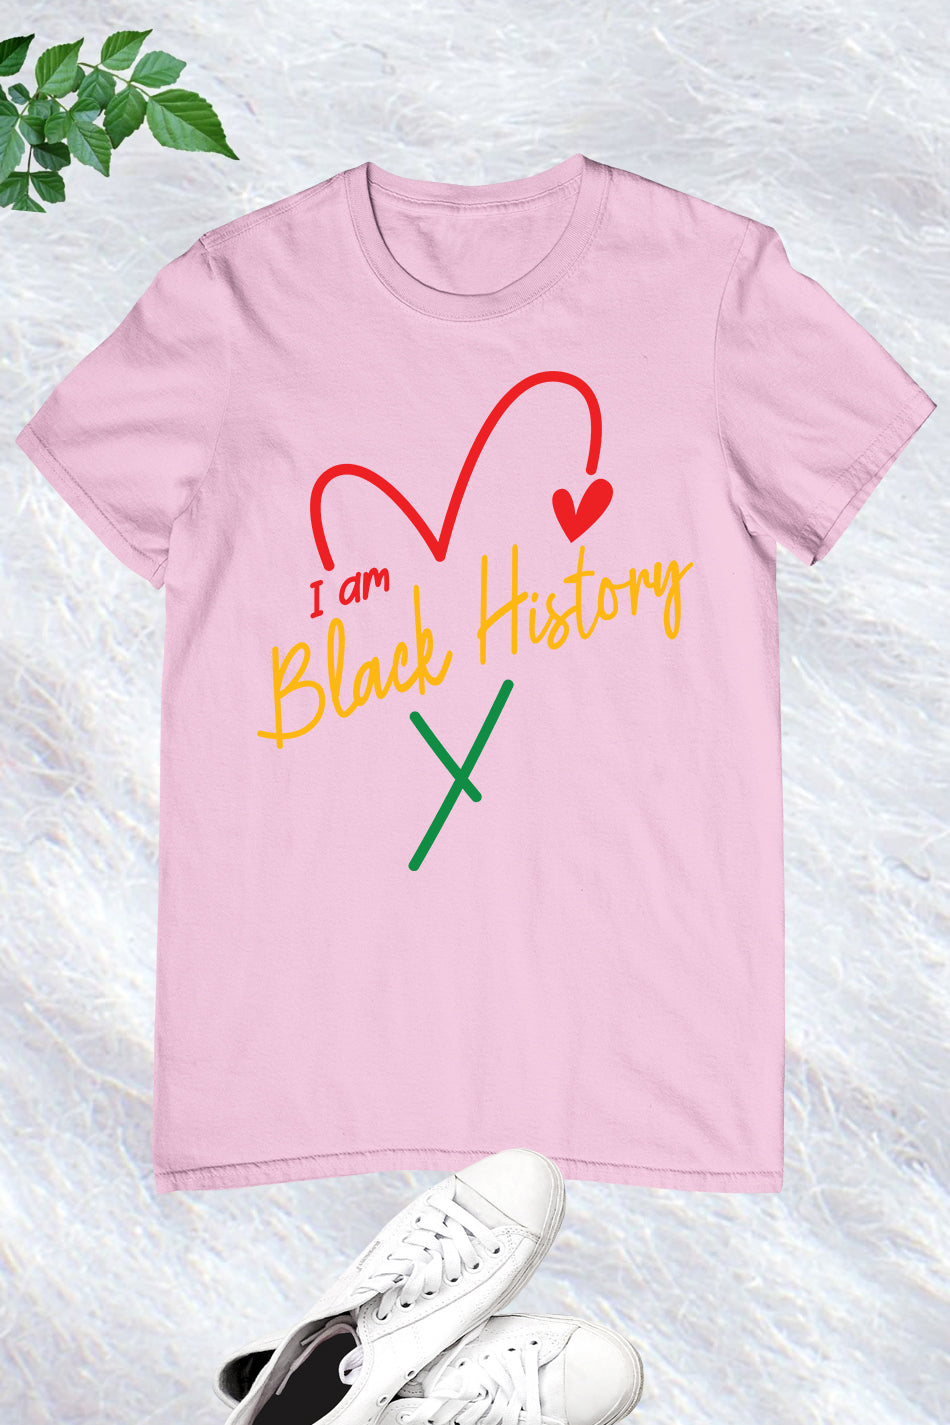 I am Black History Funny T Shirt